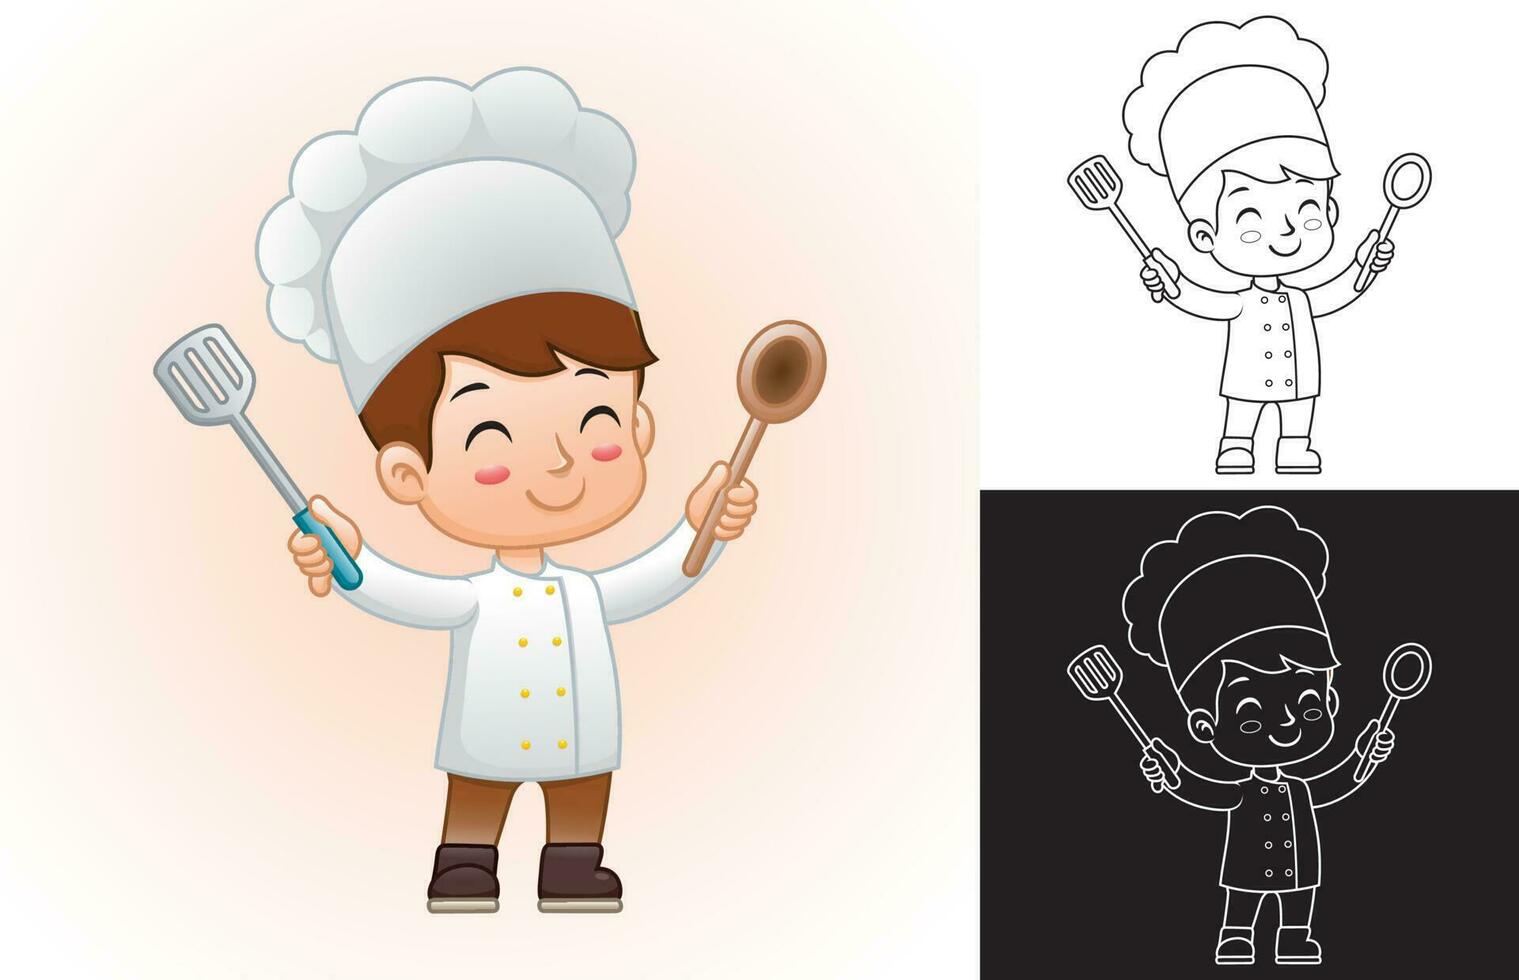 vektor tecknad serie av pojke i kock enhetlig innehav sked och spatel. färg bok eller sida